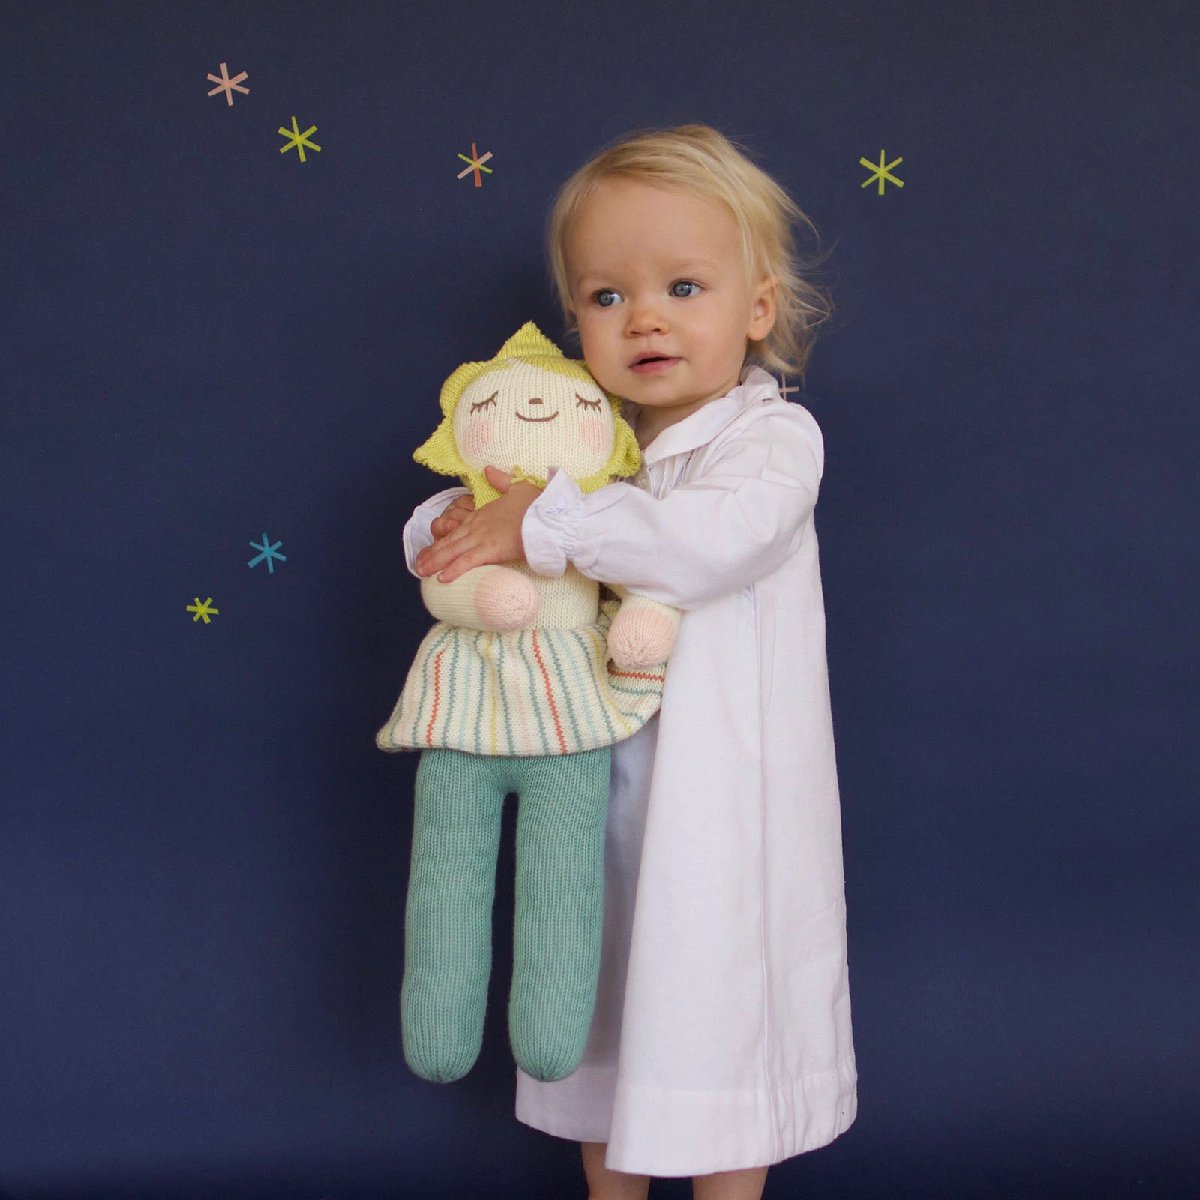 Blabla | "Nova the Star" kids cotton doll - play